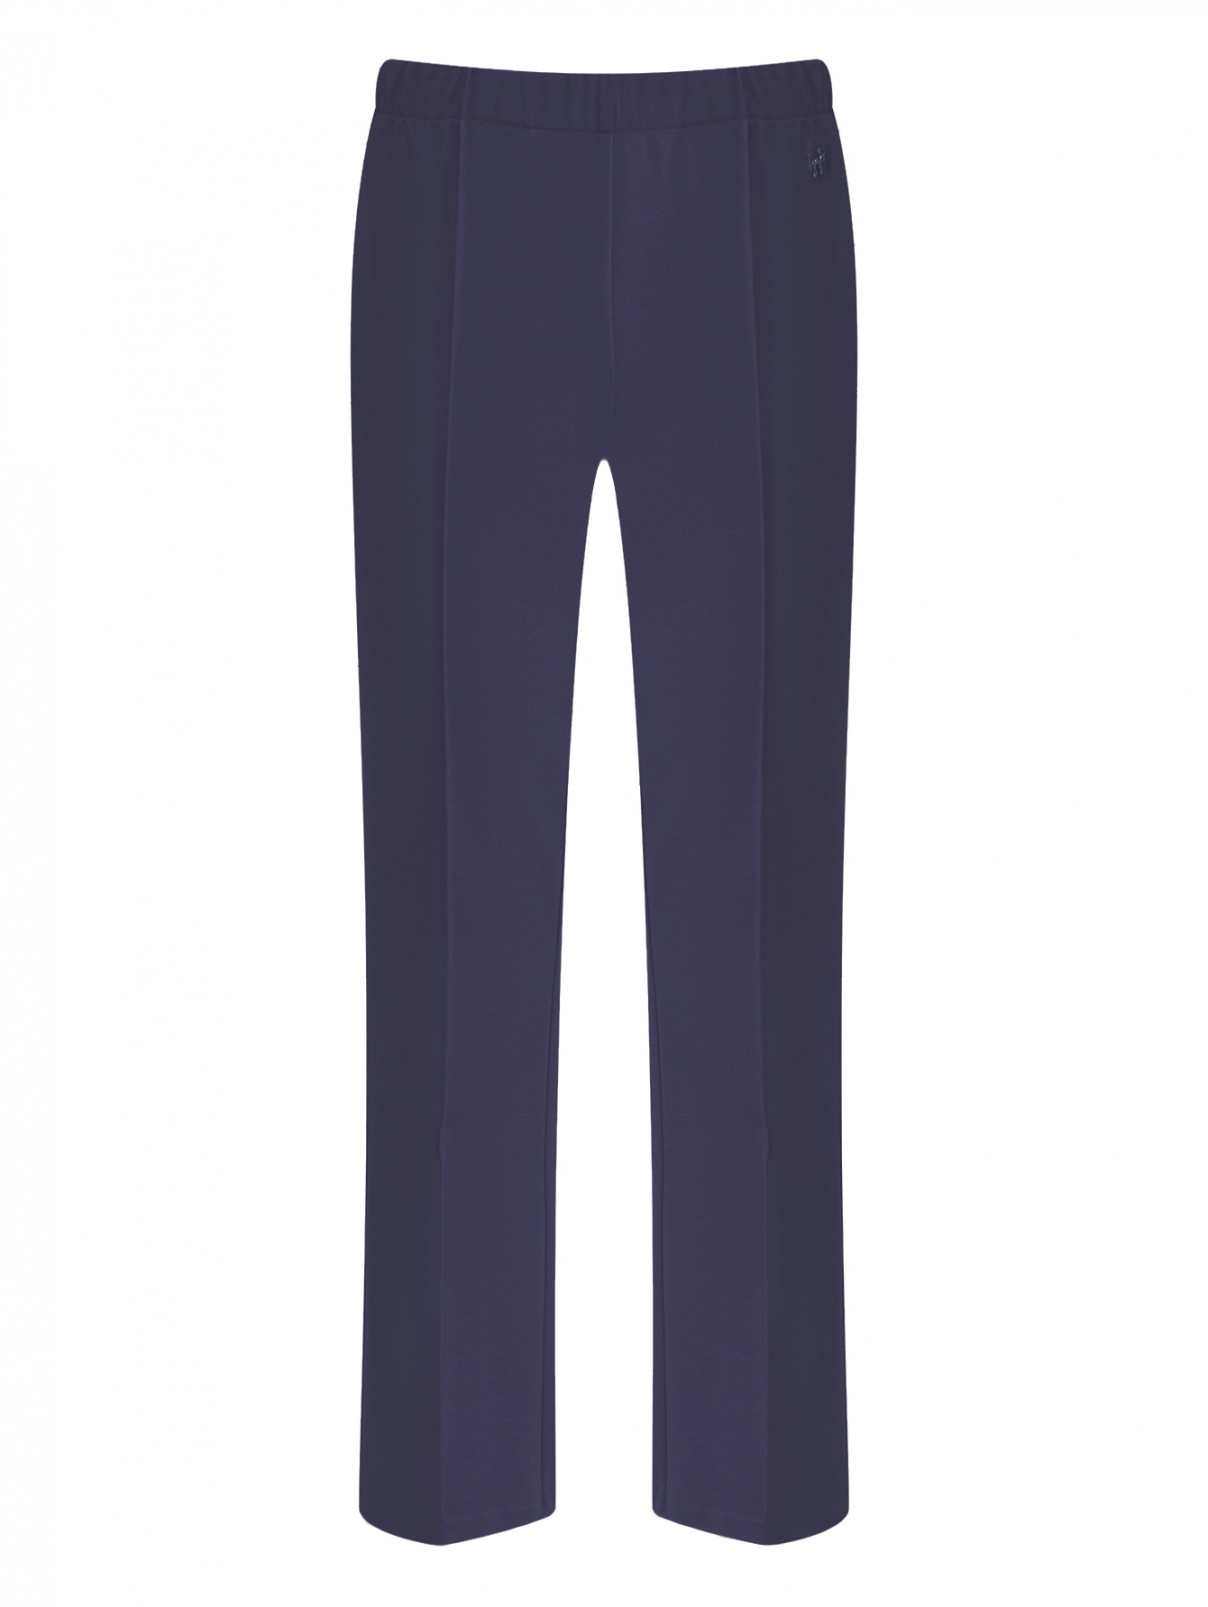 Трикотажные брюки на резинке Il Gufo  –  Общий вид  – Цвет:  Синий